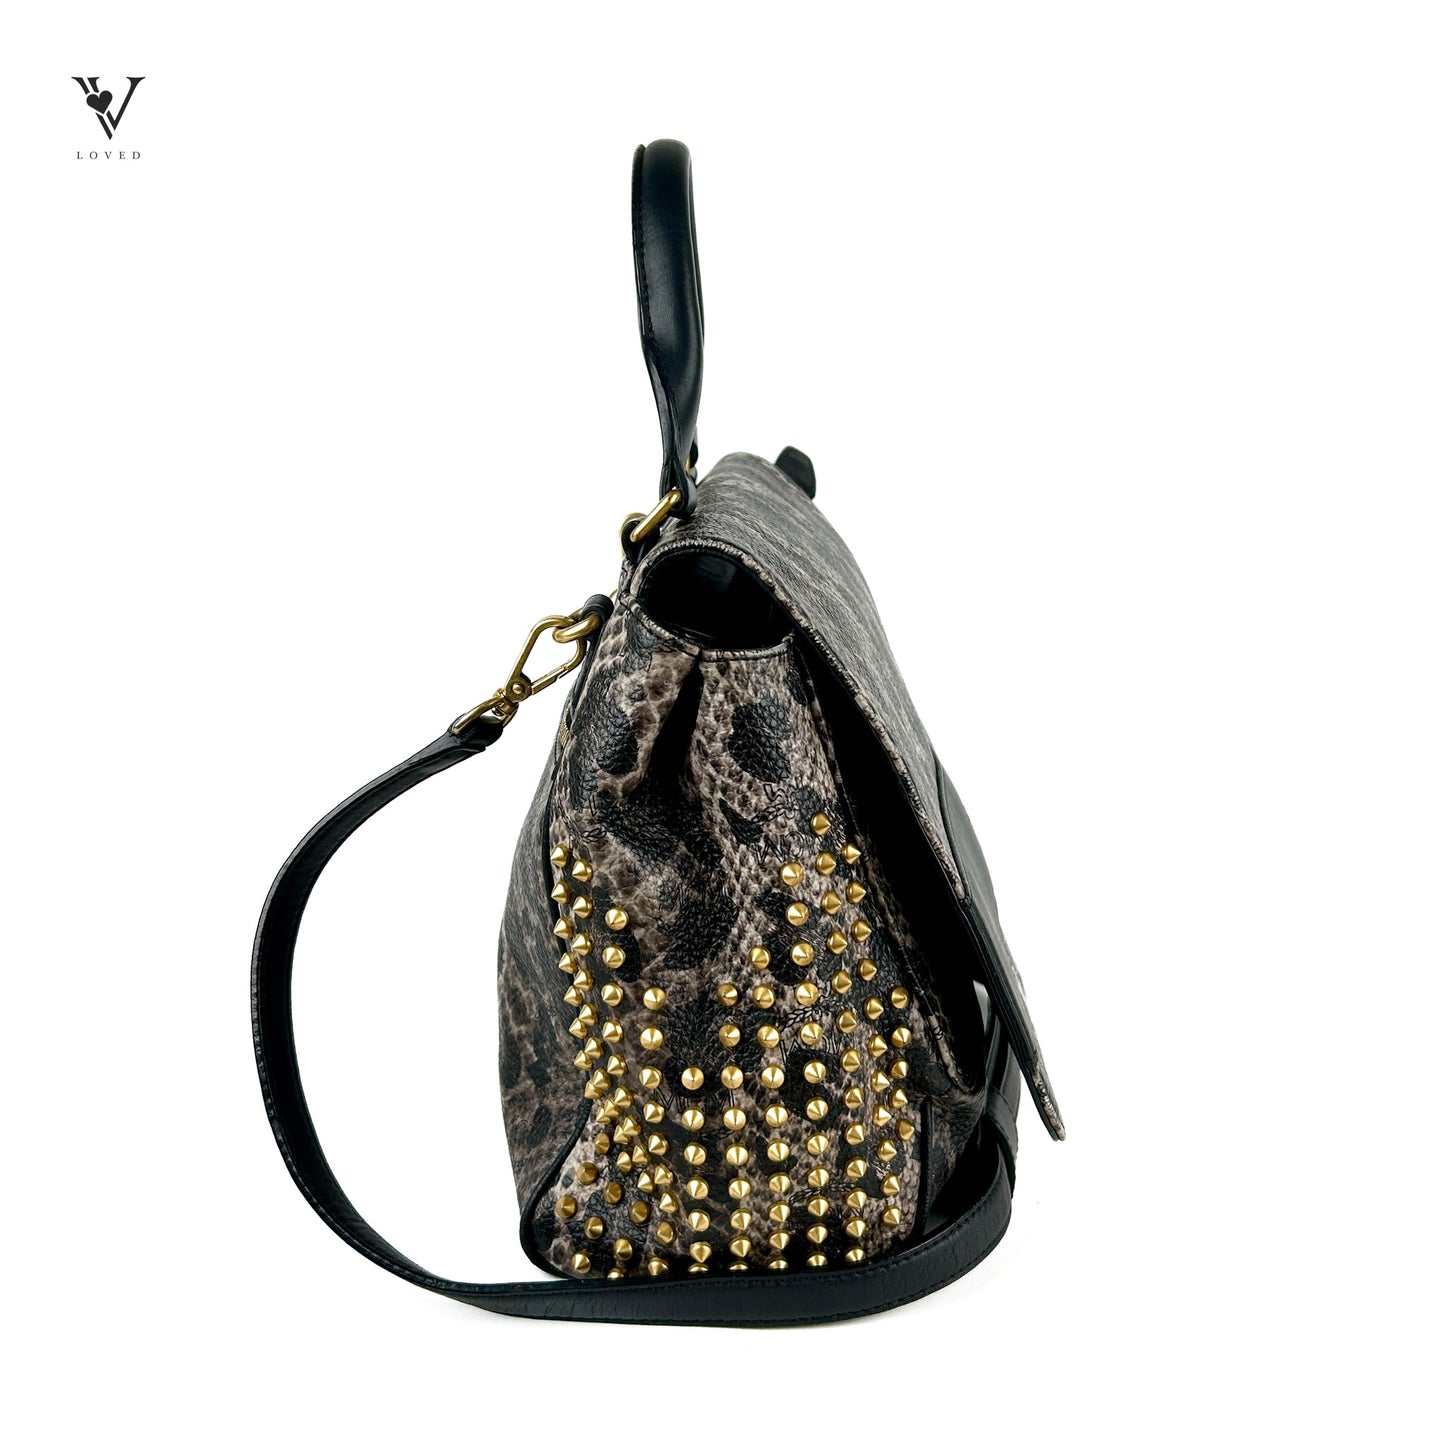 Studded Two-Way Messenger bag in Leather Snake Skin Motif